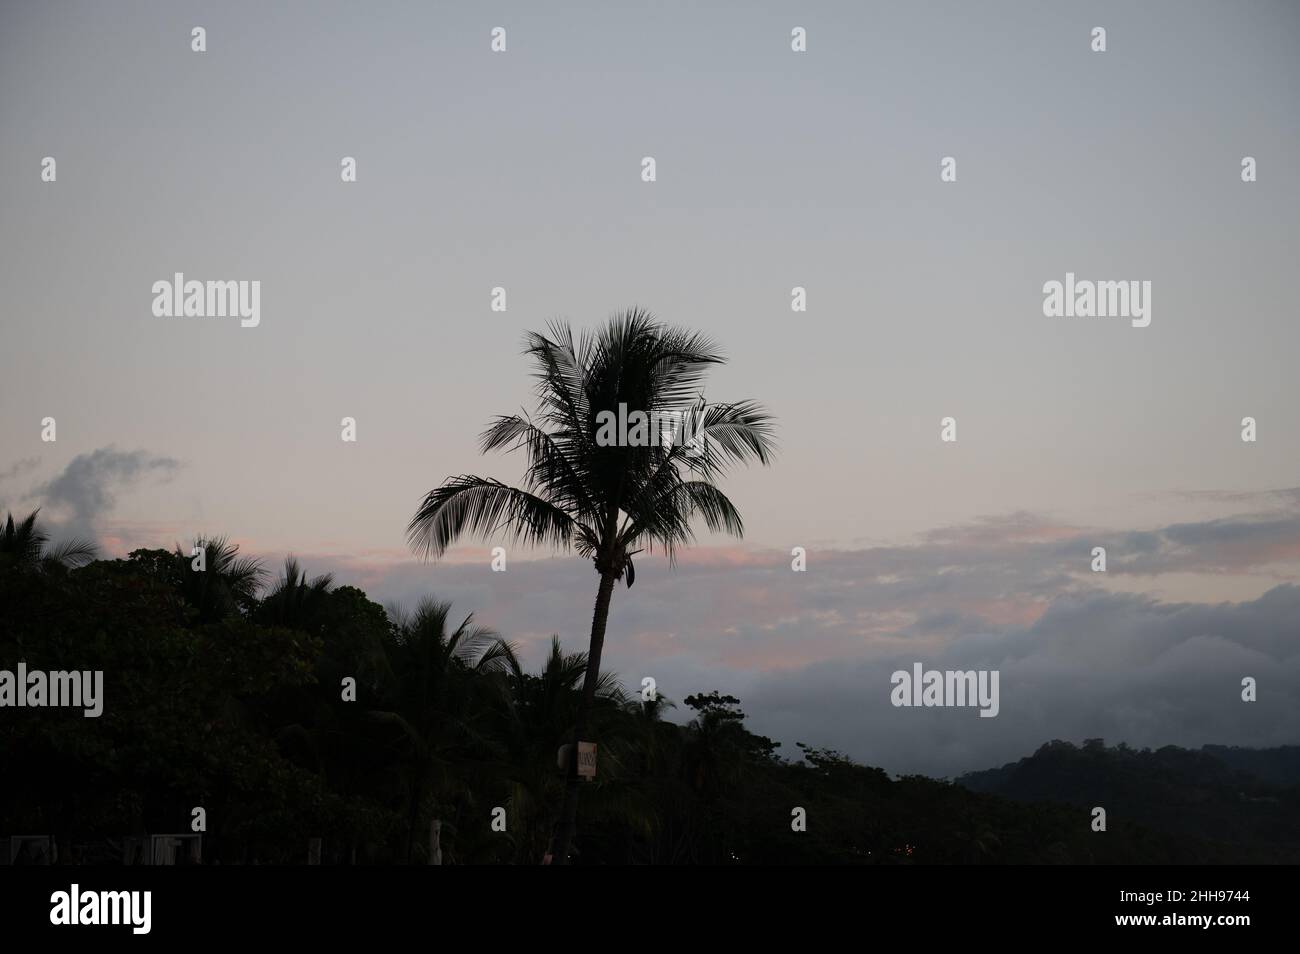 Sunset, Palm and pura vida, costa rica Stock Photo